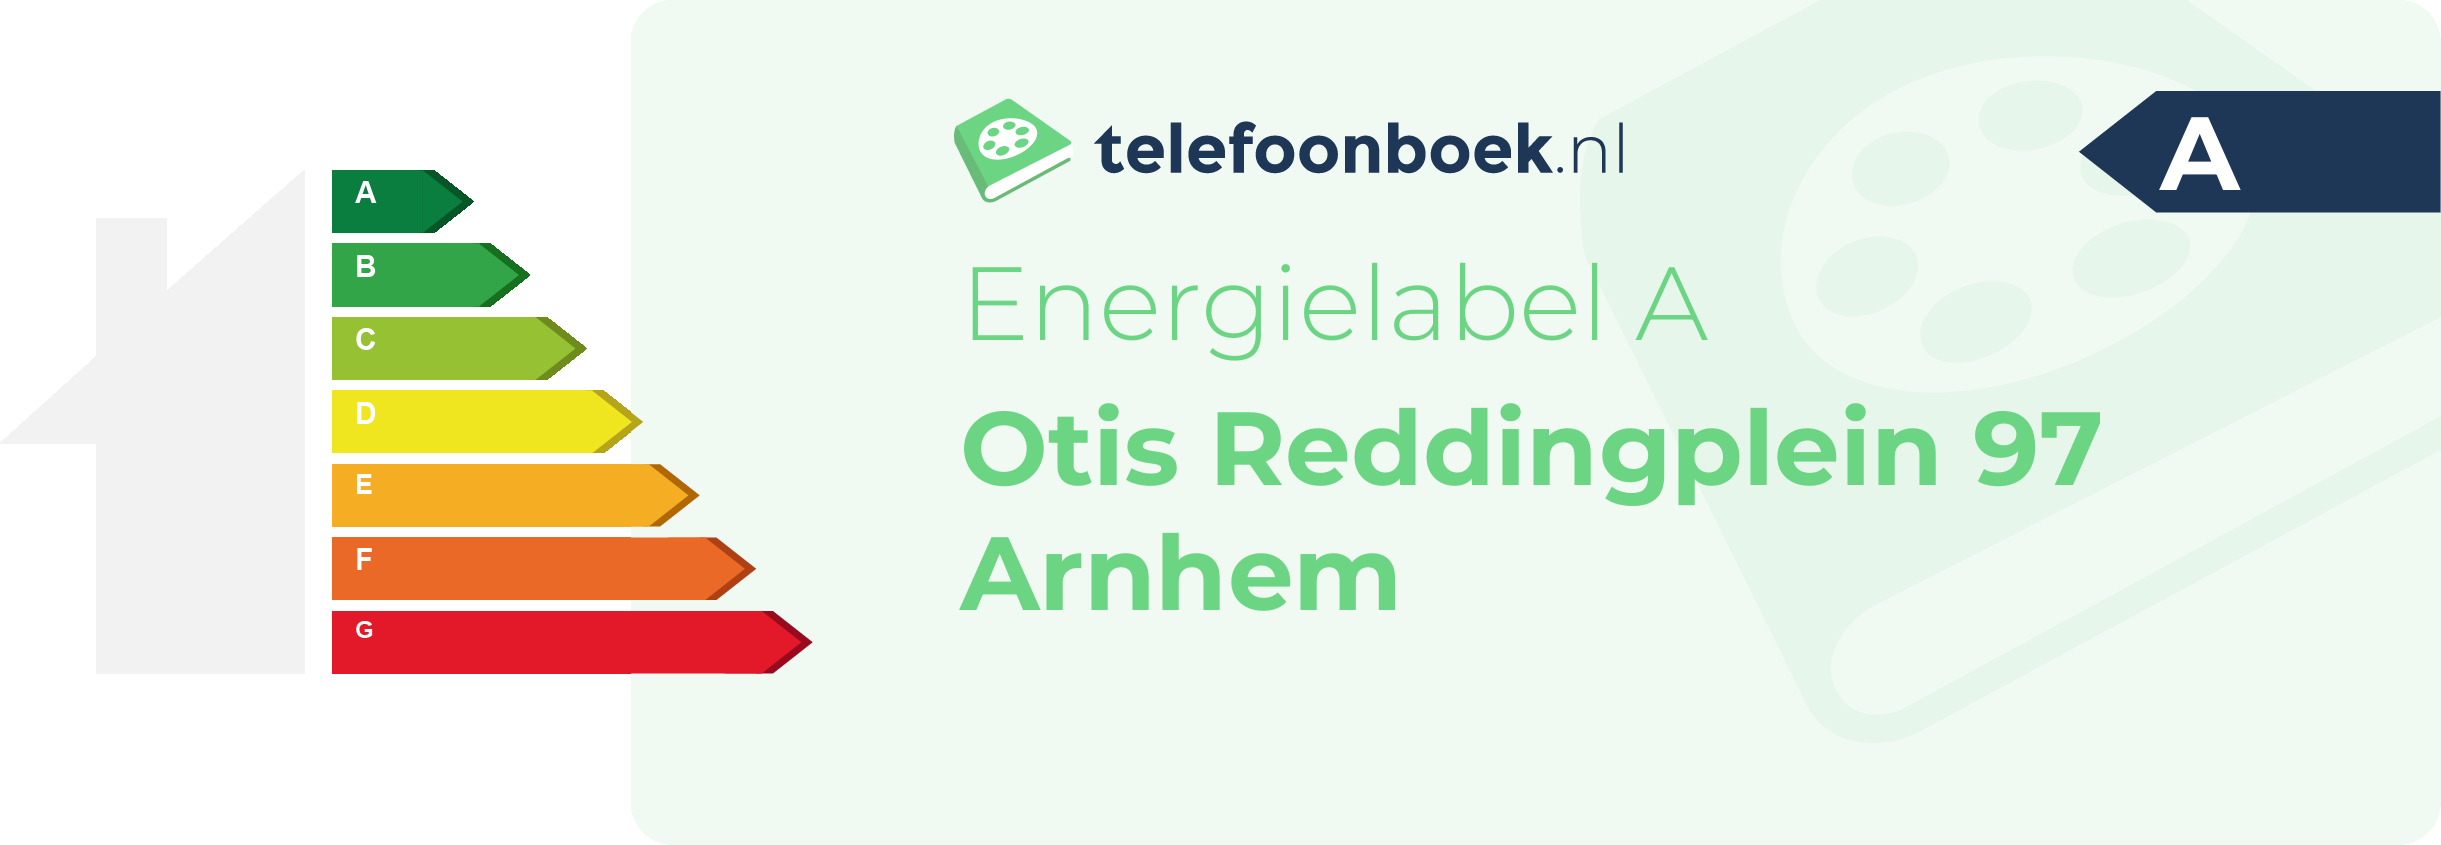 Energielabel Otis Reddingplein 97 Arnhem